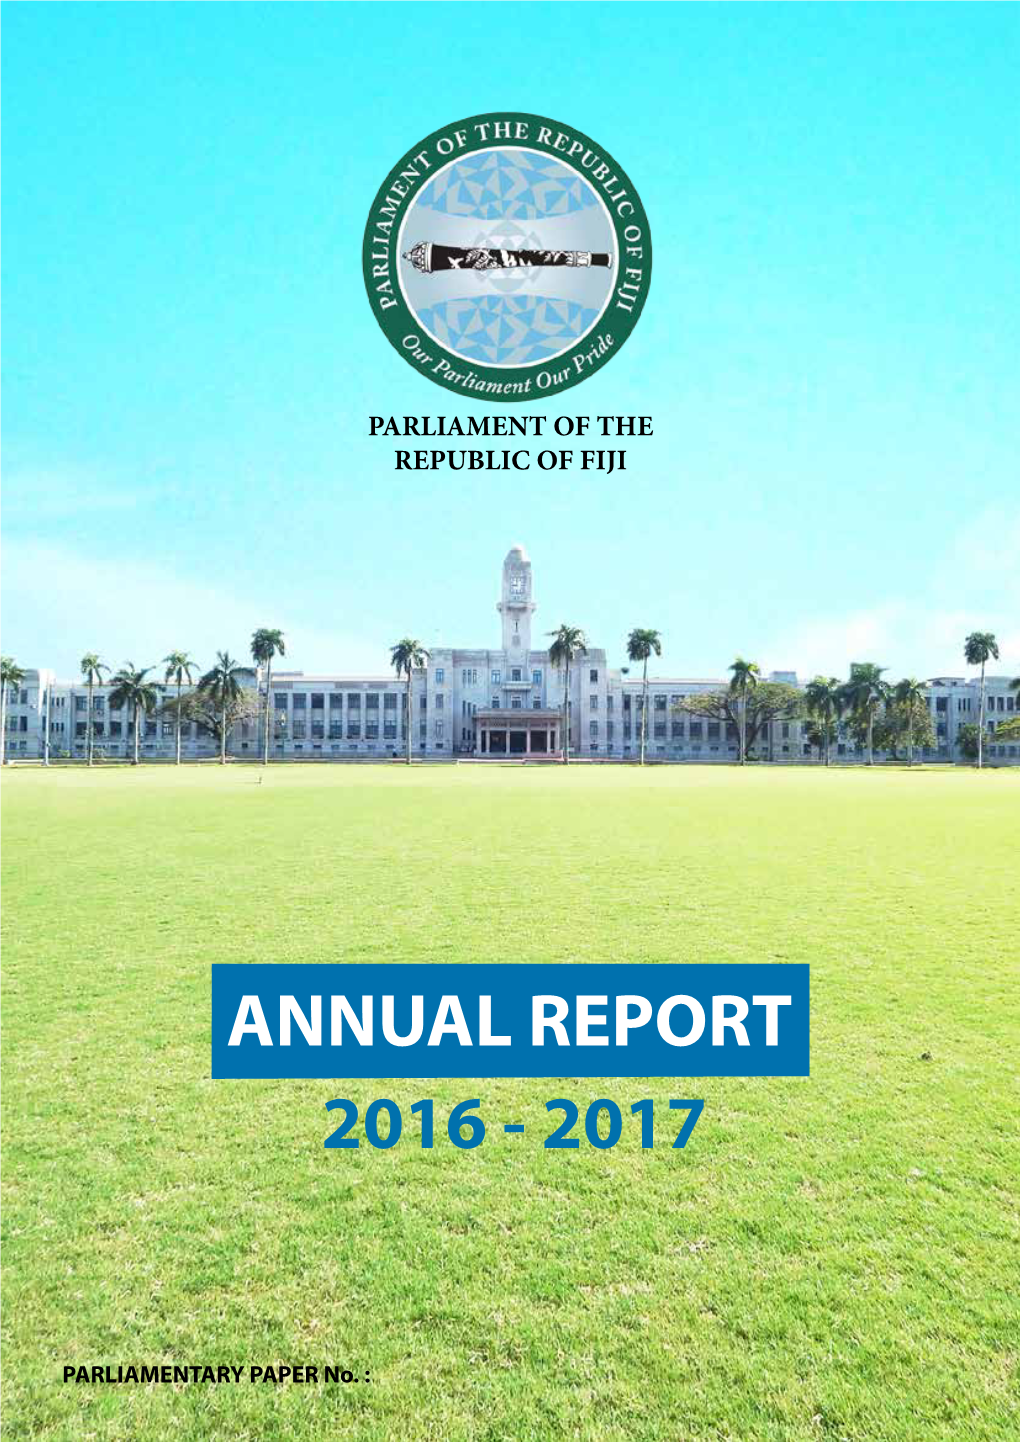 Annual Report 2016 - 2017